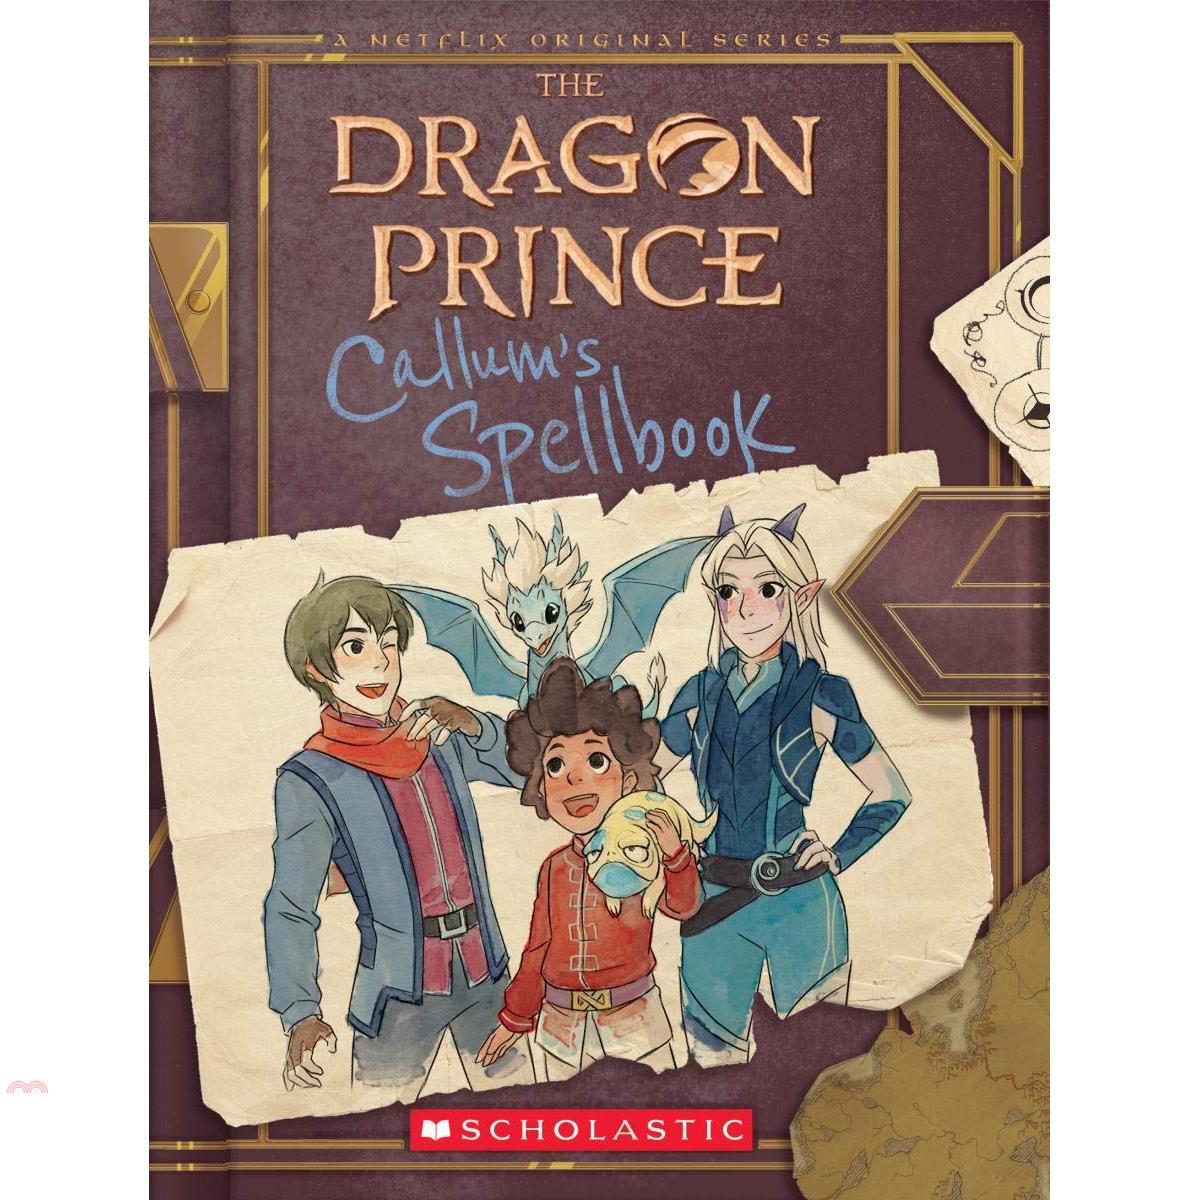 Callum’s Spellbook (the Dragon Prince)